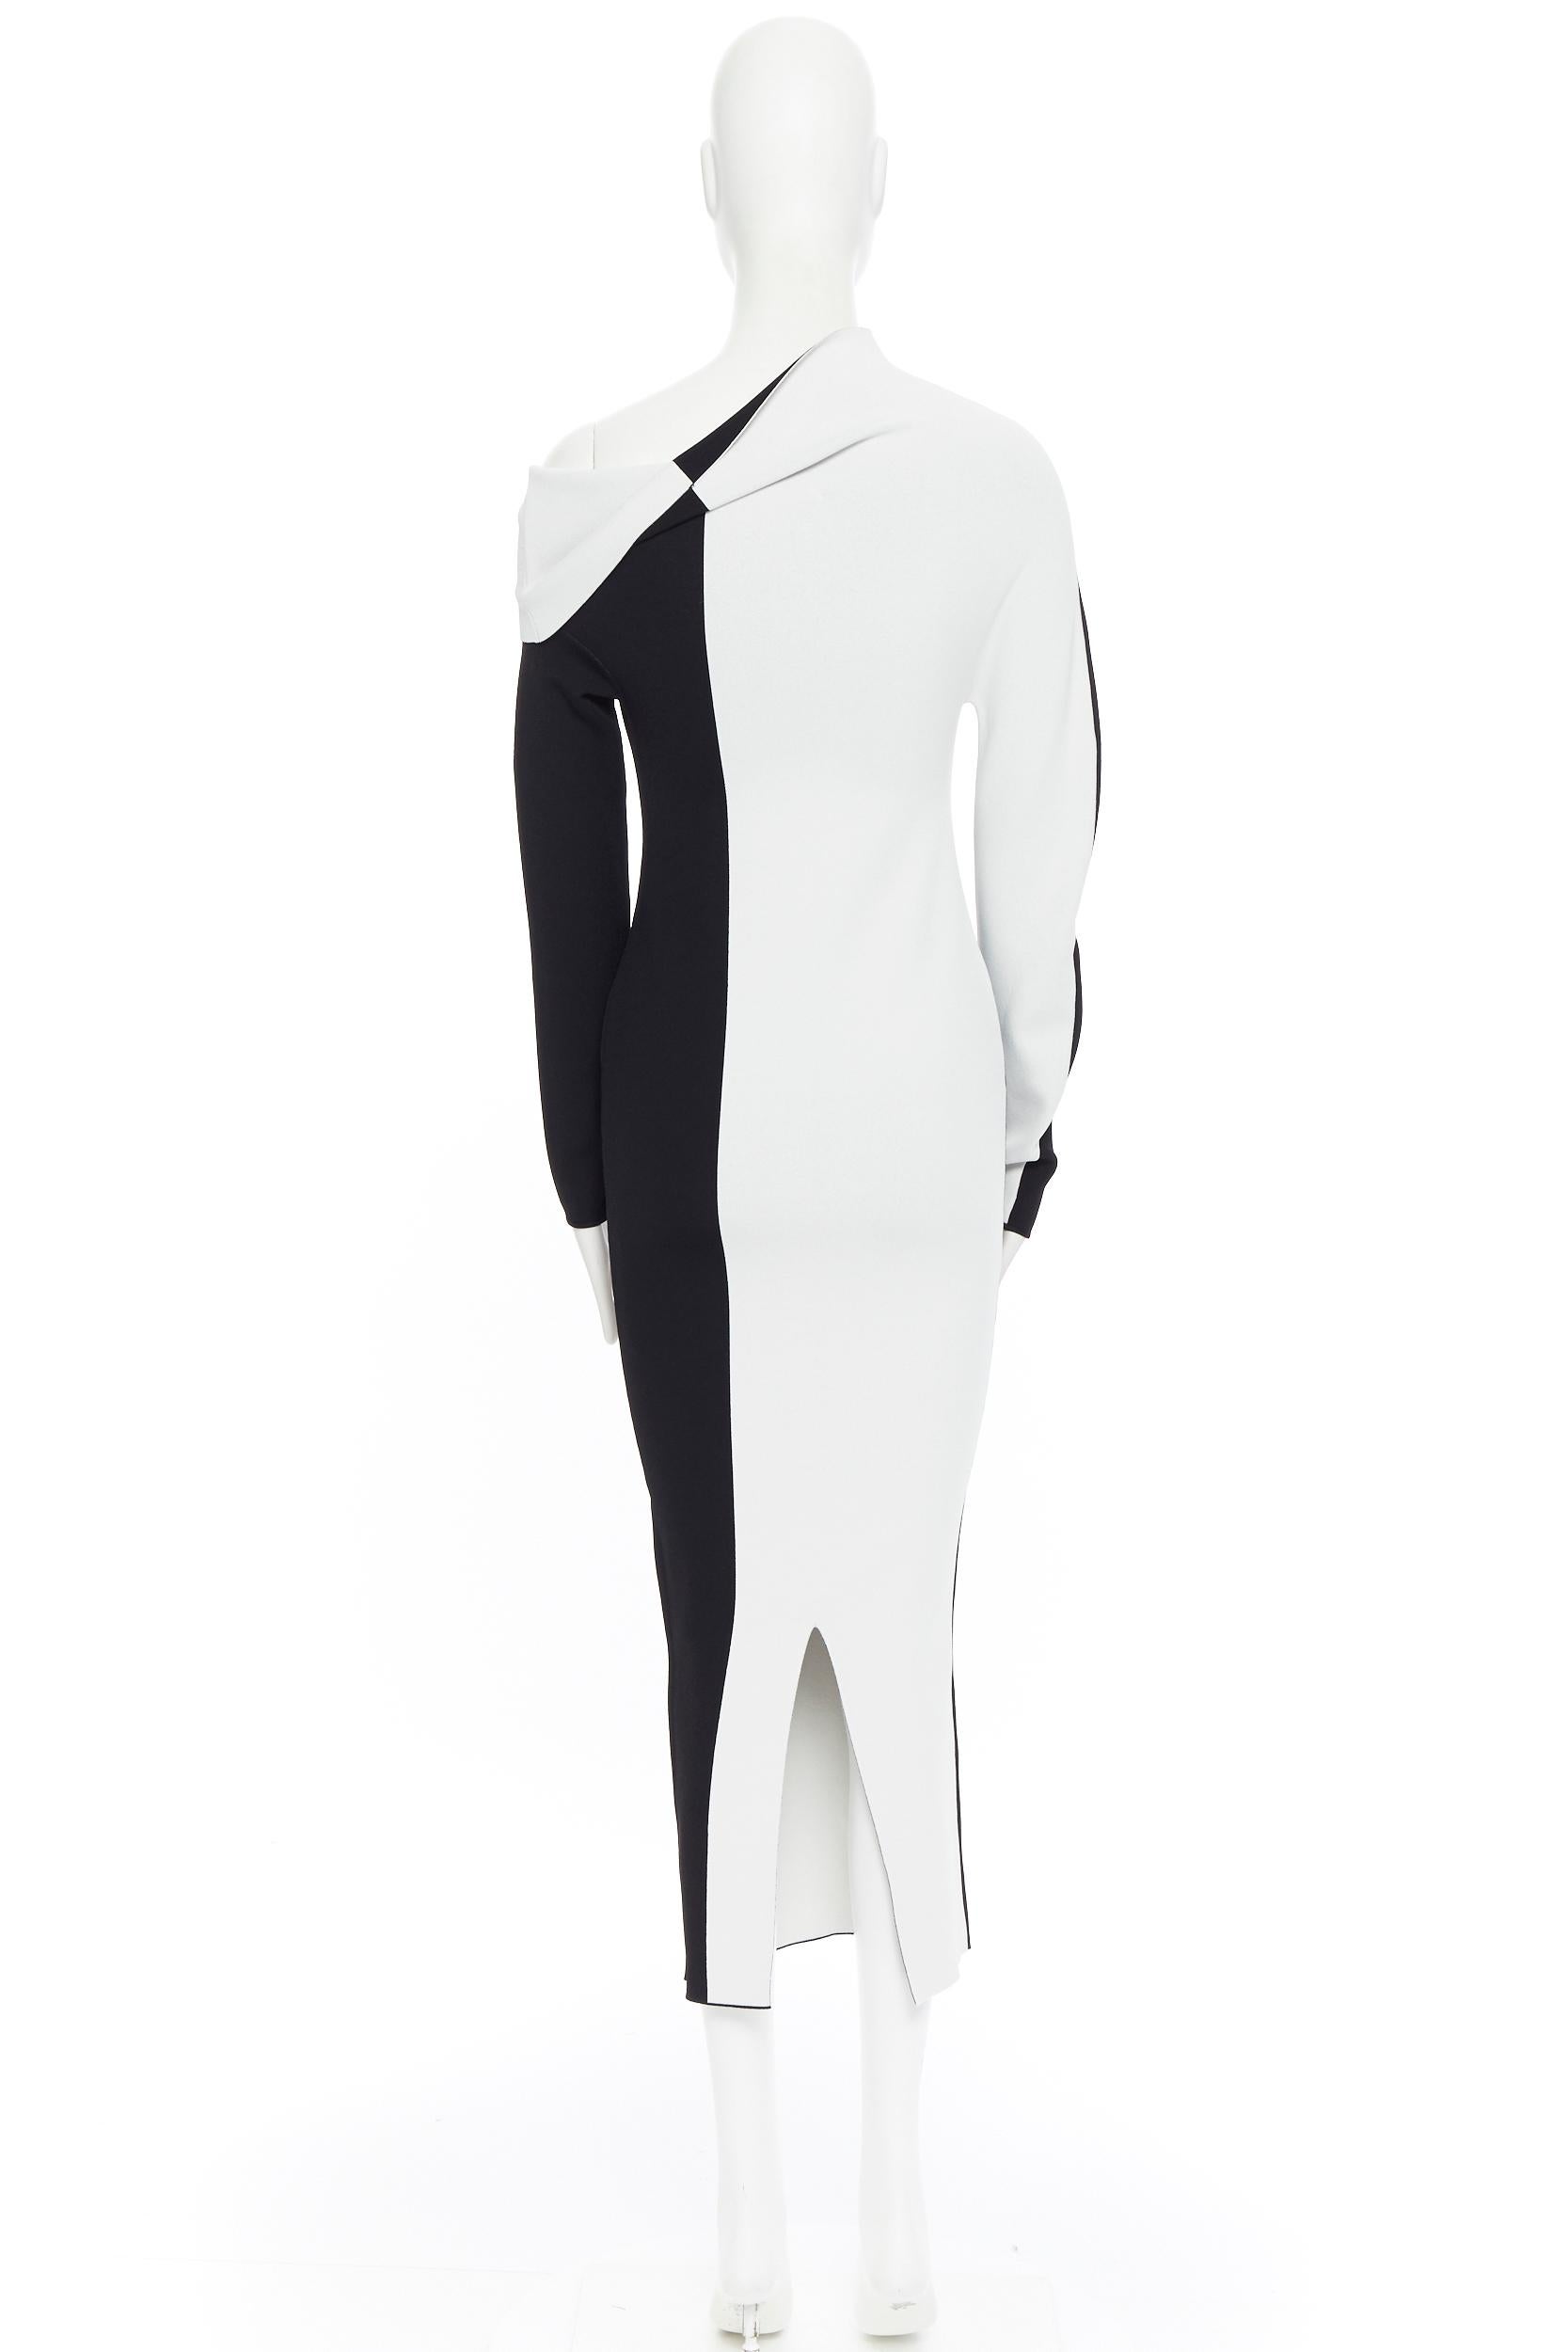 HAIDER ACKERMANN SS18 black white colorblocked bodycon off shoulder dress S 1